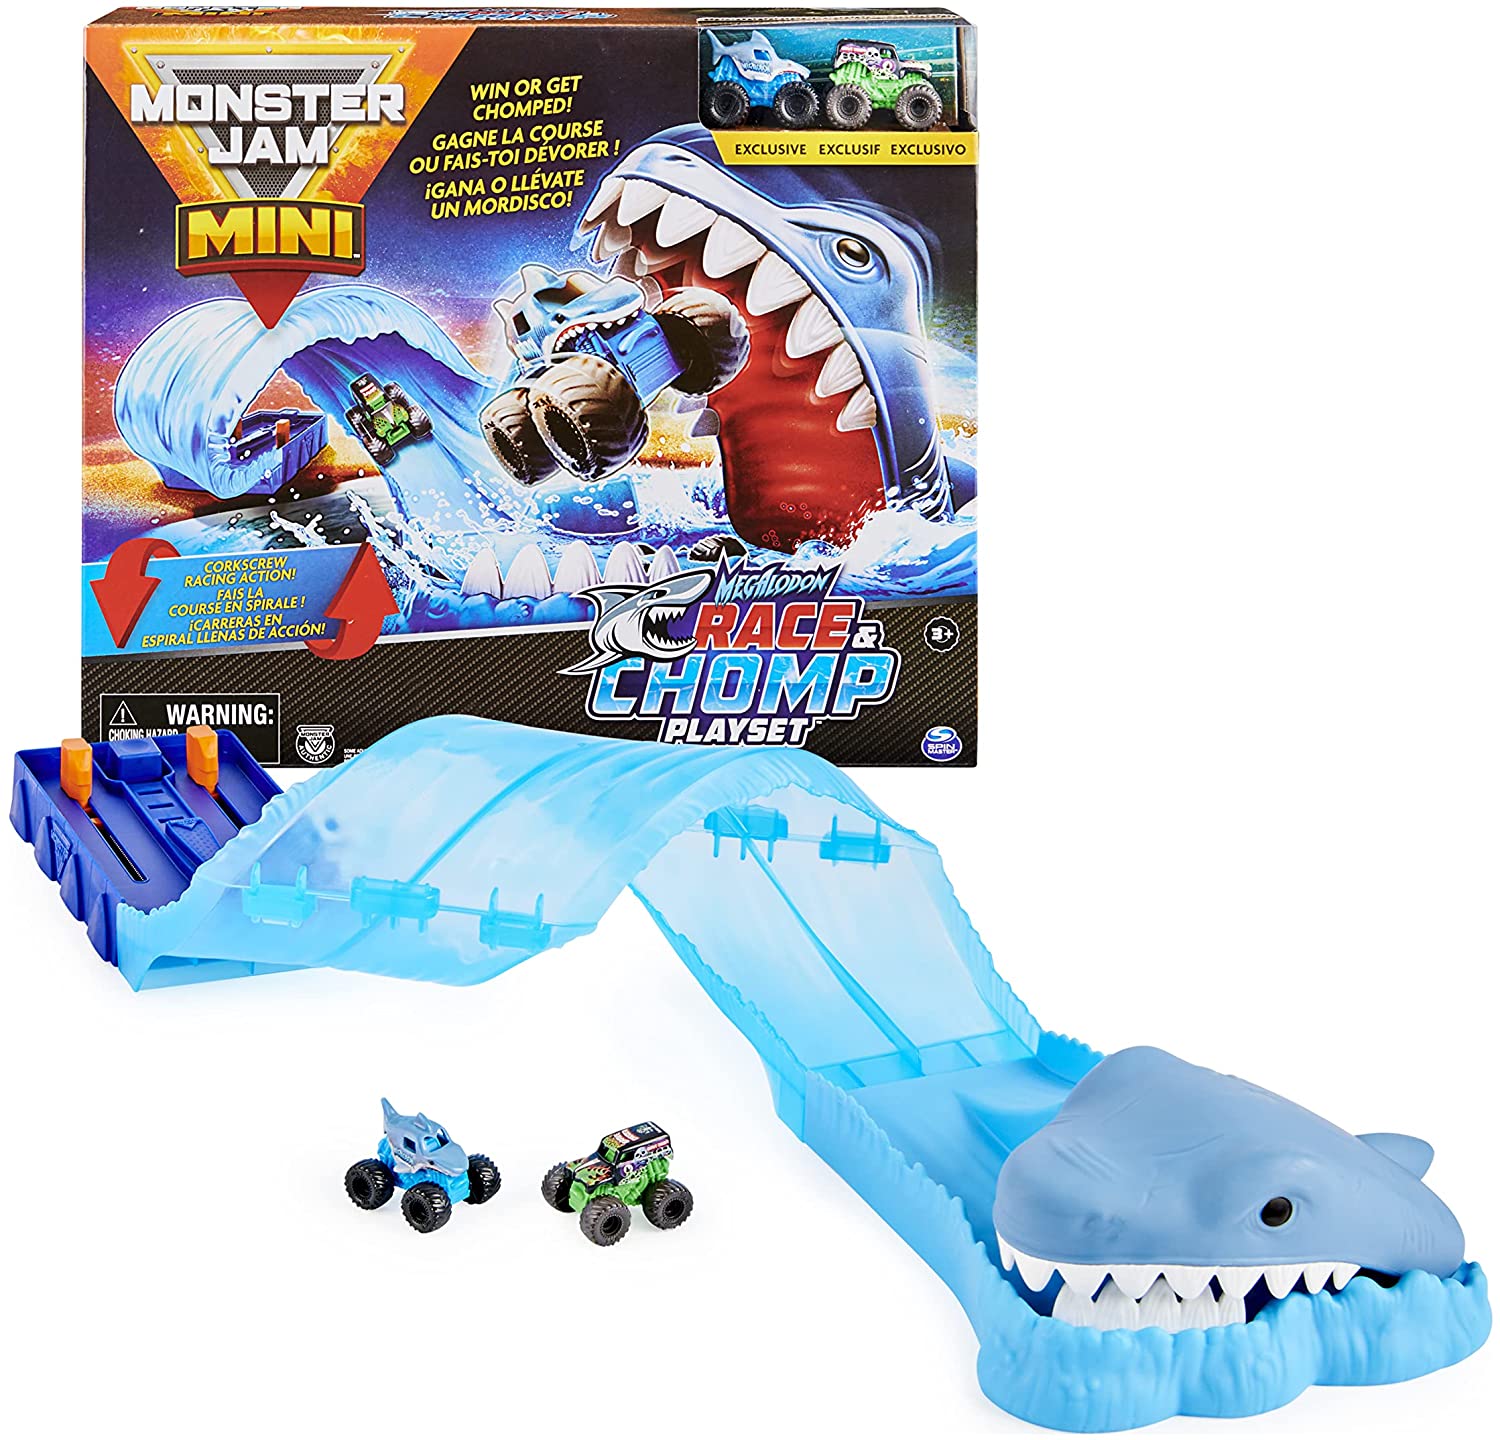 Monster Jam Mini Megalodon Race & Chomp Kids' Playset w/ 2 Mini Trucks $7.34 + FS w/ Amazon Prime or FS on $25+